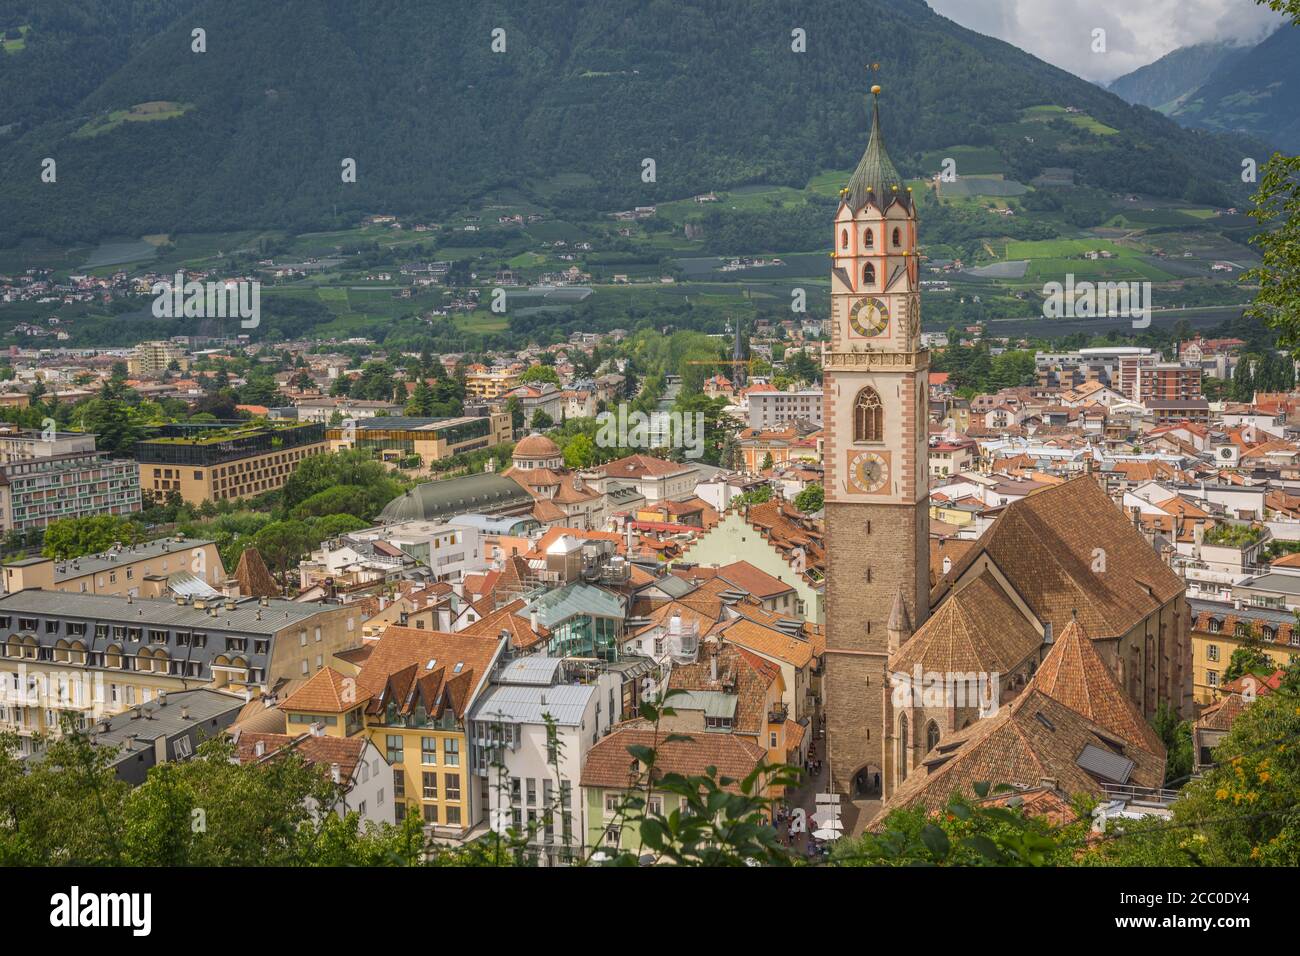 Meran (Meran) in Südtirol - Trentino-Südtirol - Norditalien. Schöne Stadt Trentino Alto Adige. Blick von oben Stockfoto